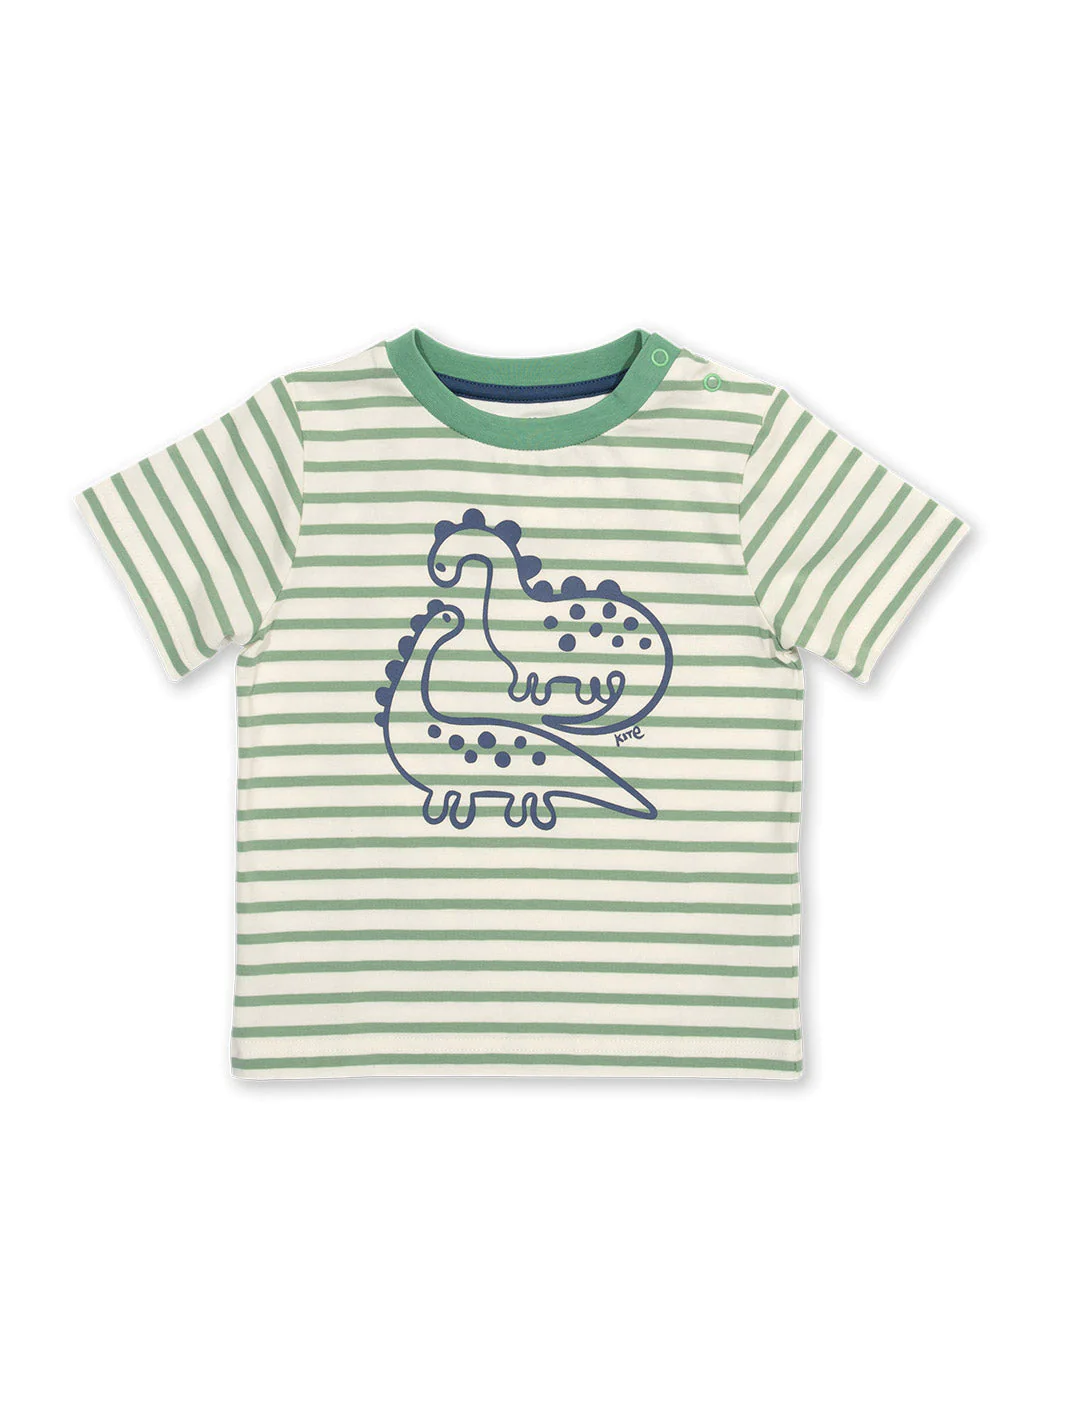 Dino Friends T-Shirt by Kite